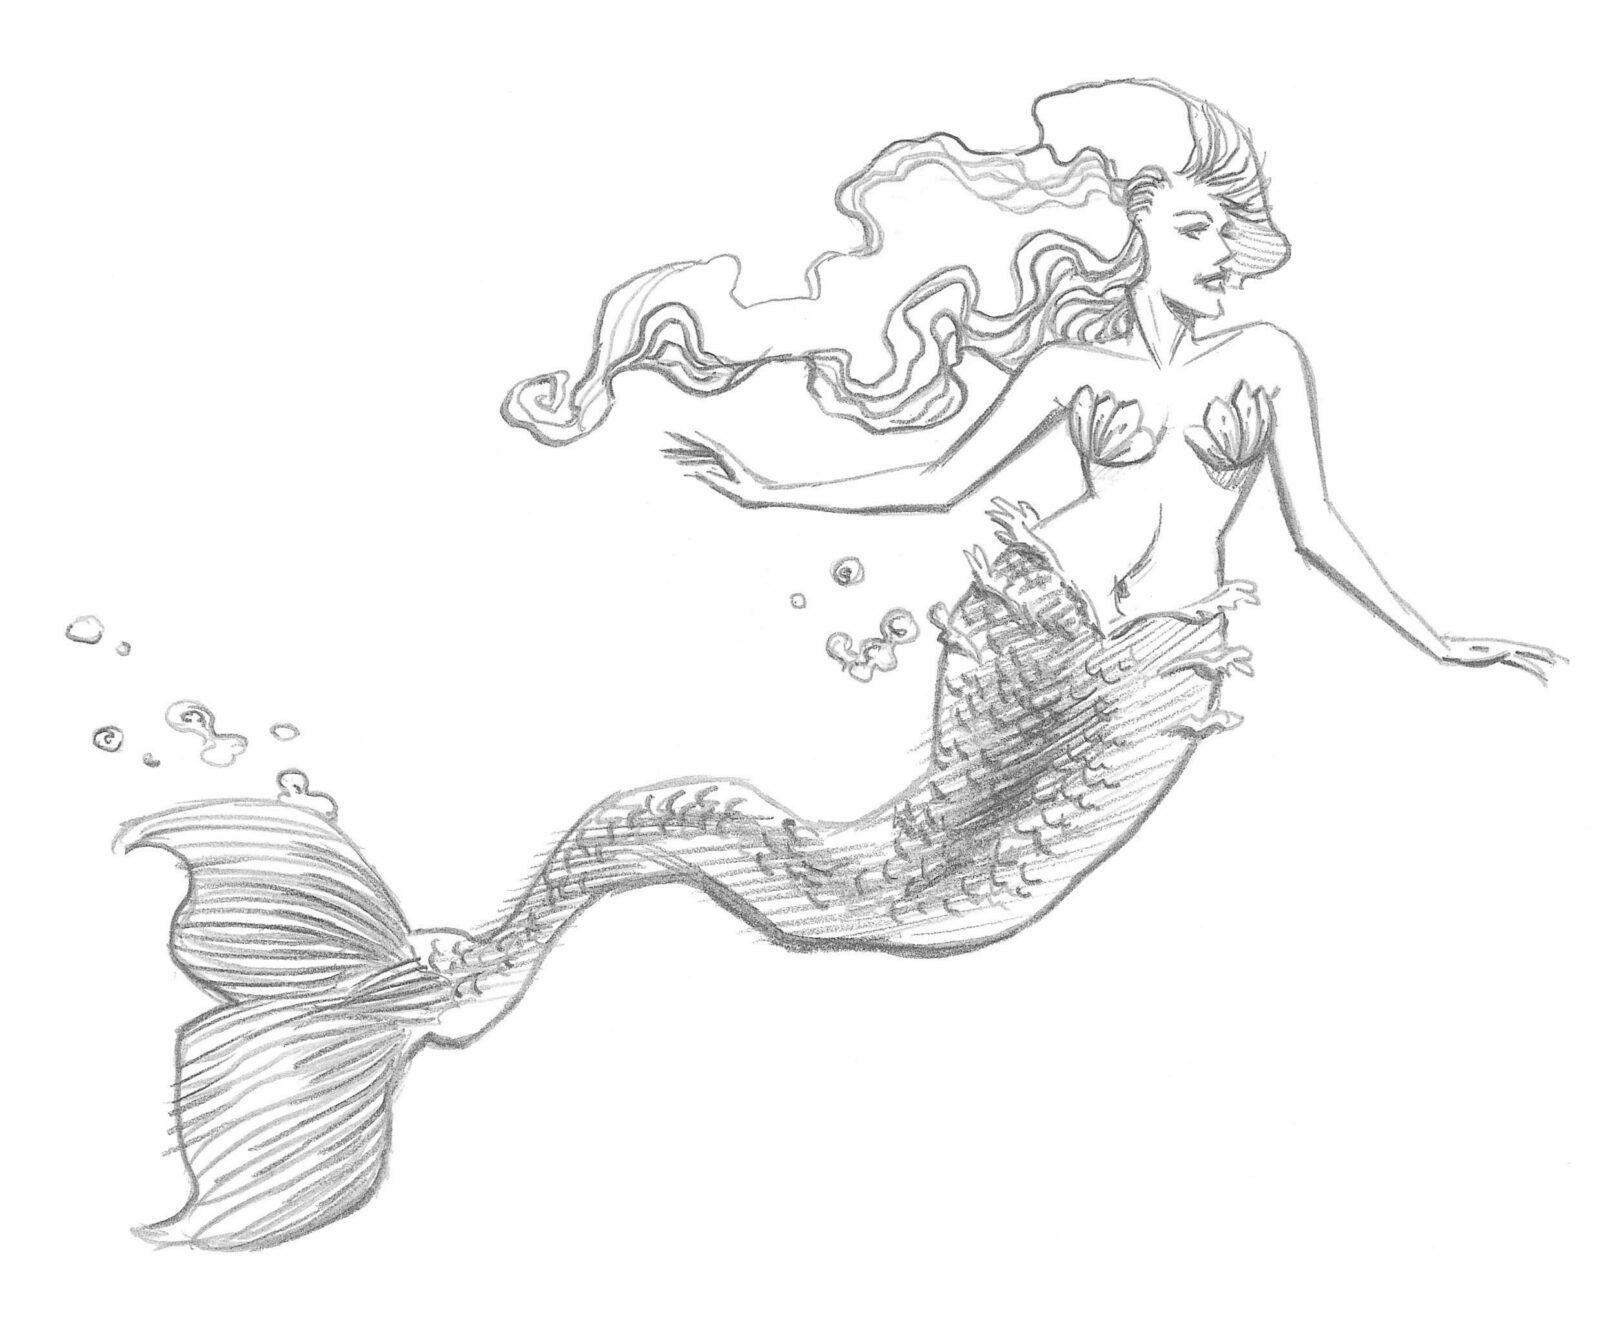 50 Mermaid Drawing Ideas How To Draw A Mermaid Harunmudak